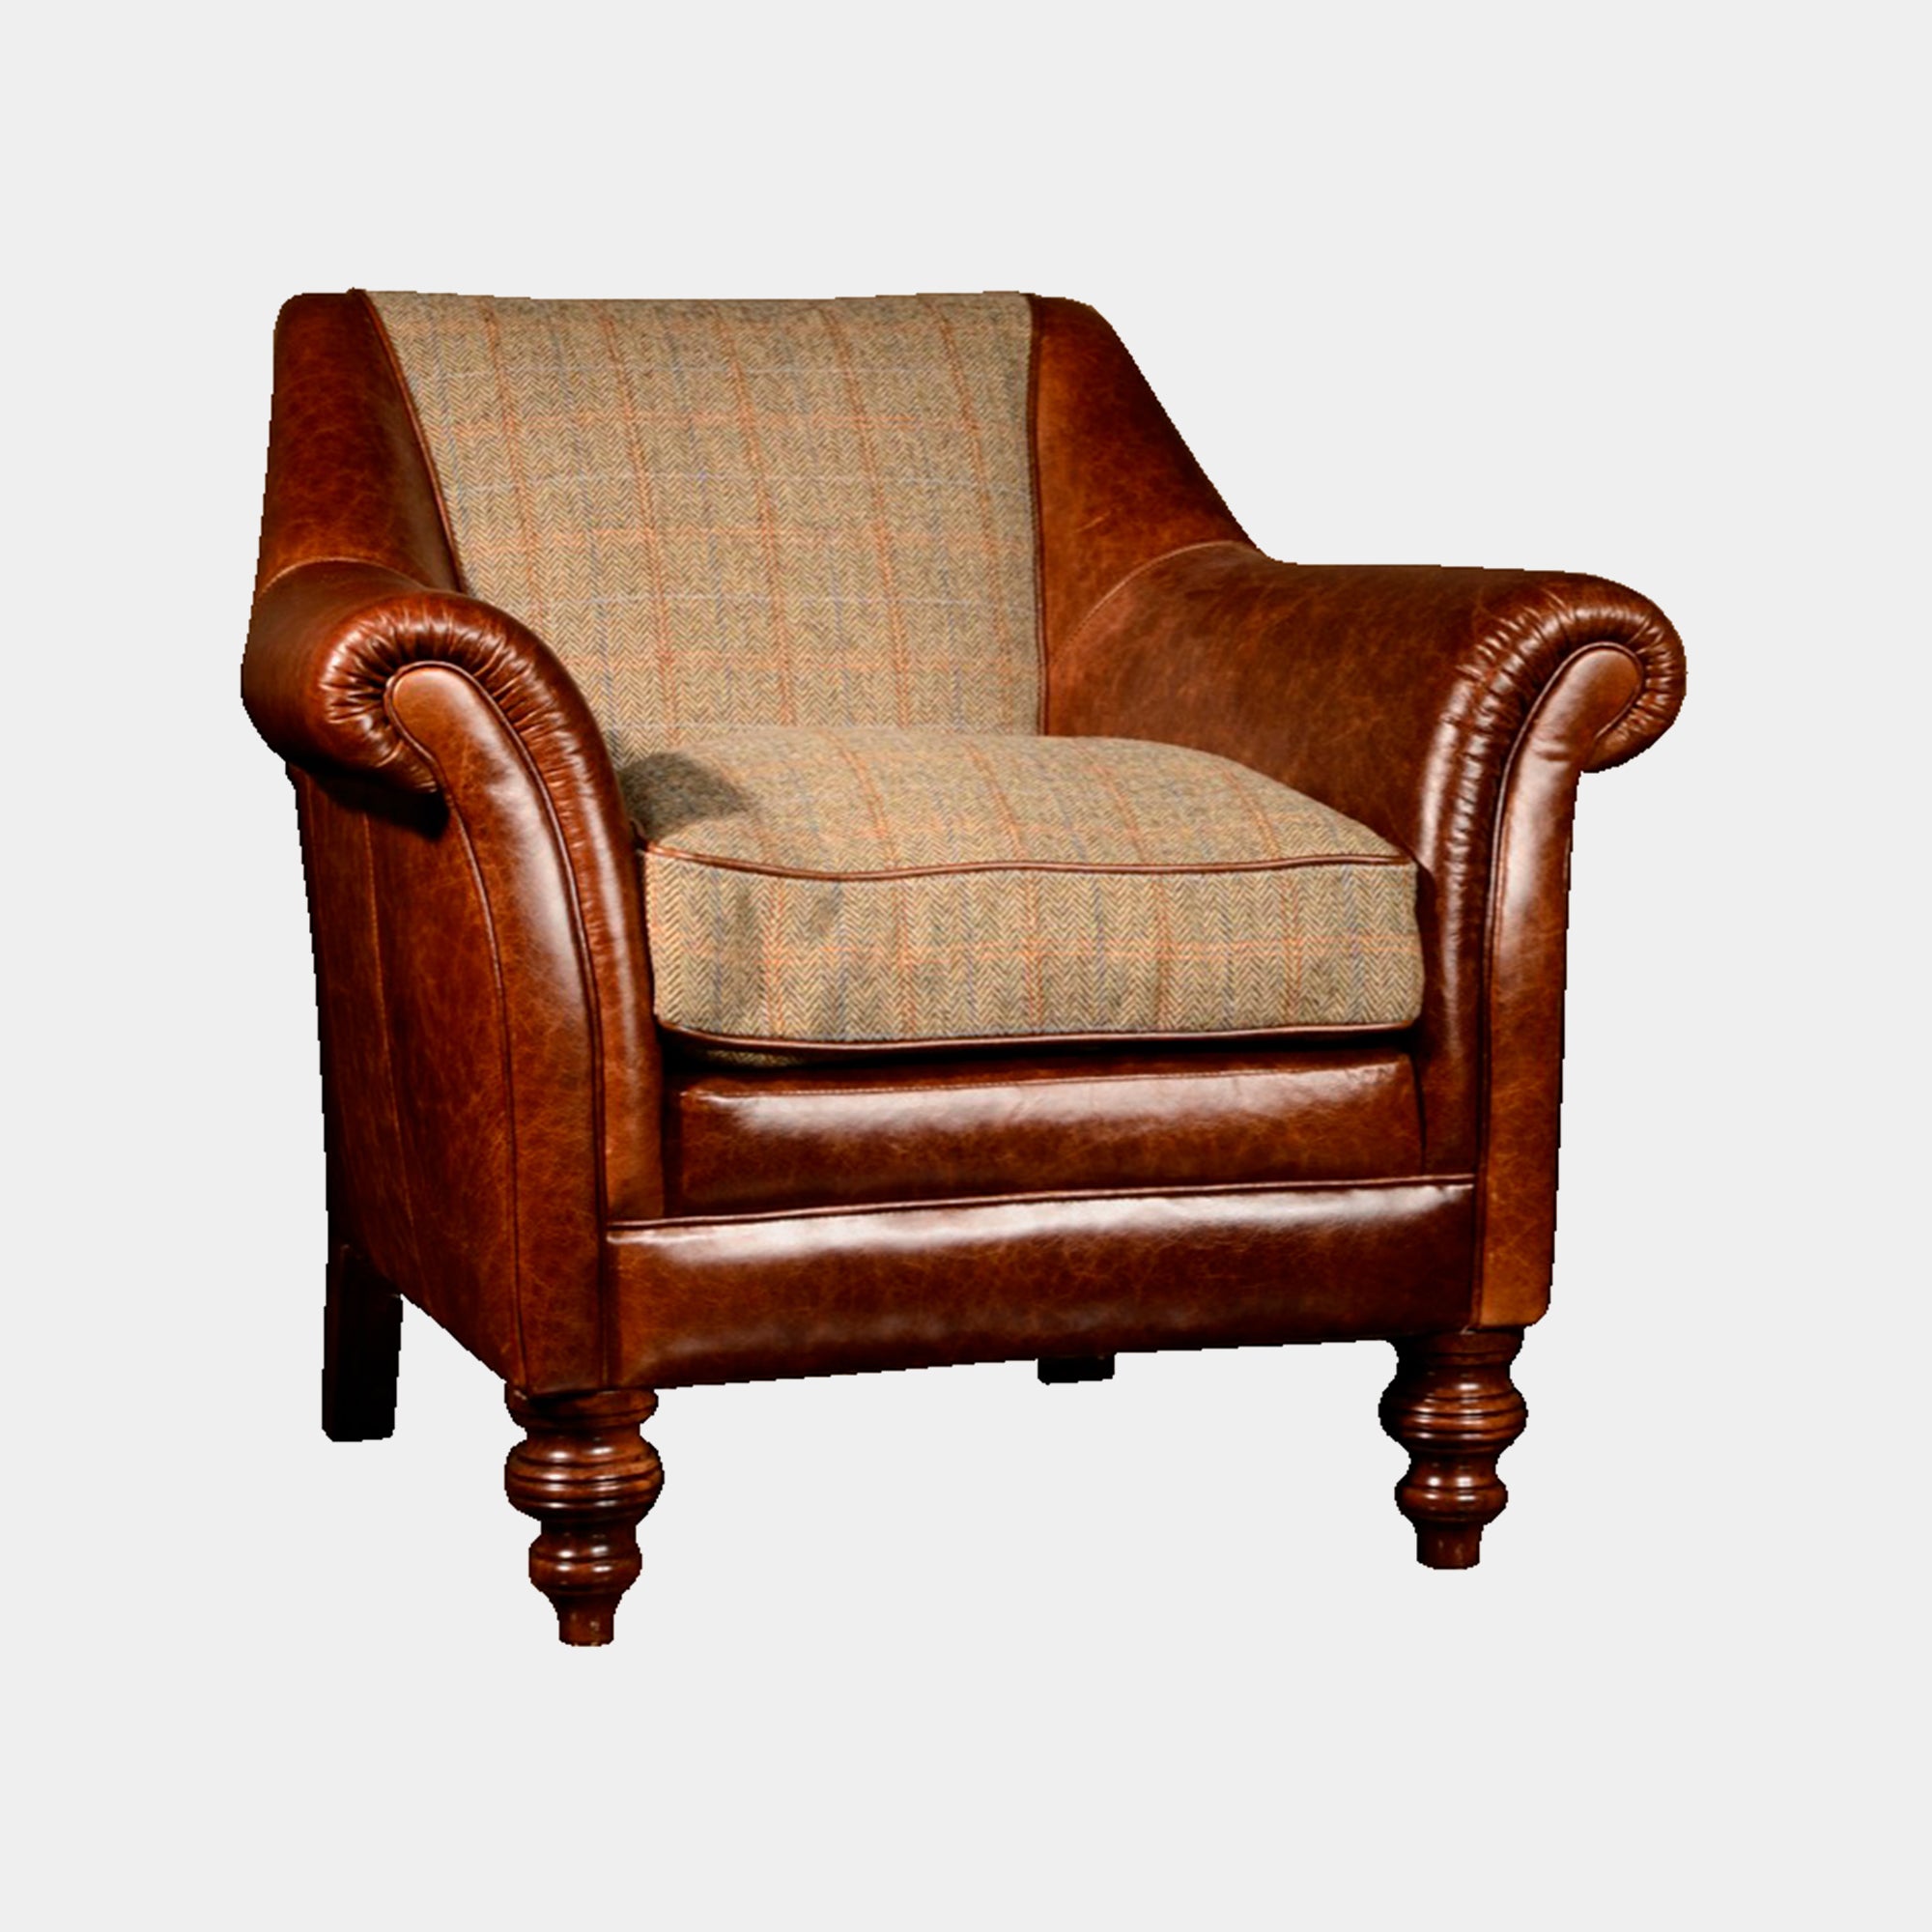 Harris Tweed Accent Chair - Option B